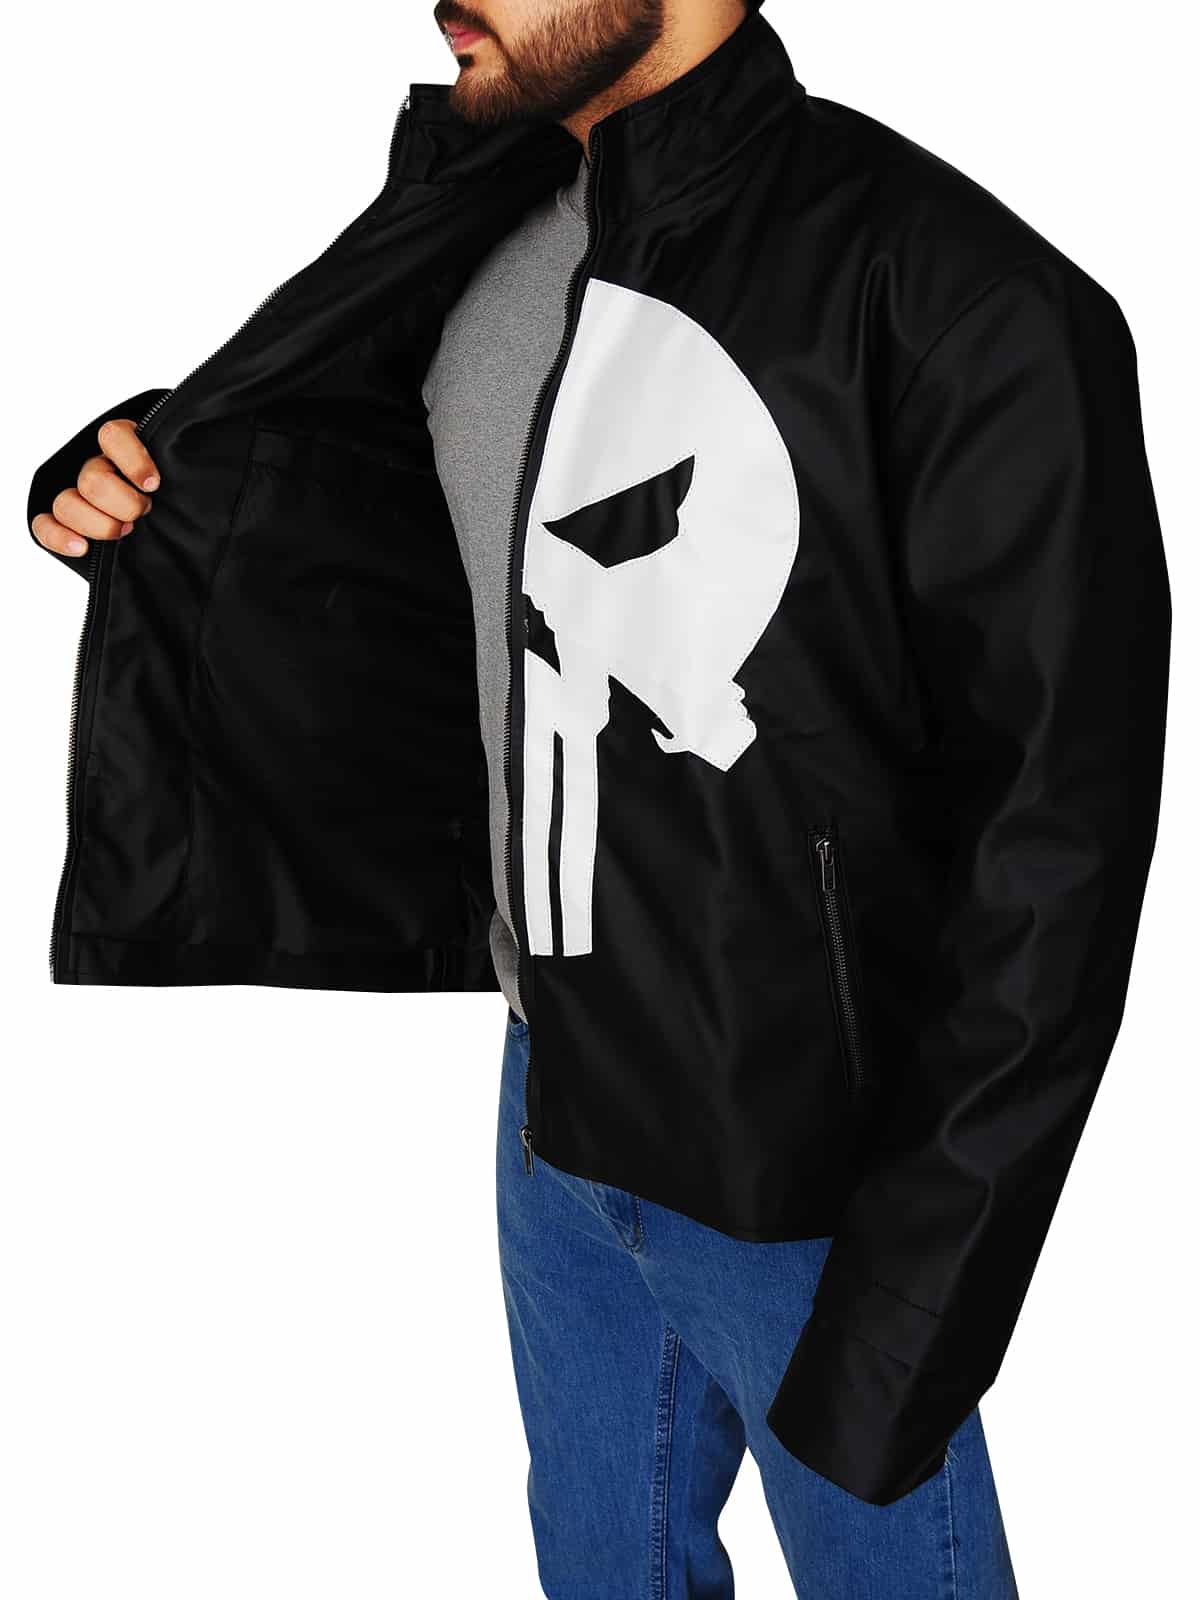 Captain America Civil War Punisher Skull Logo Leather jacket